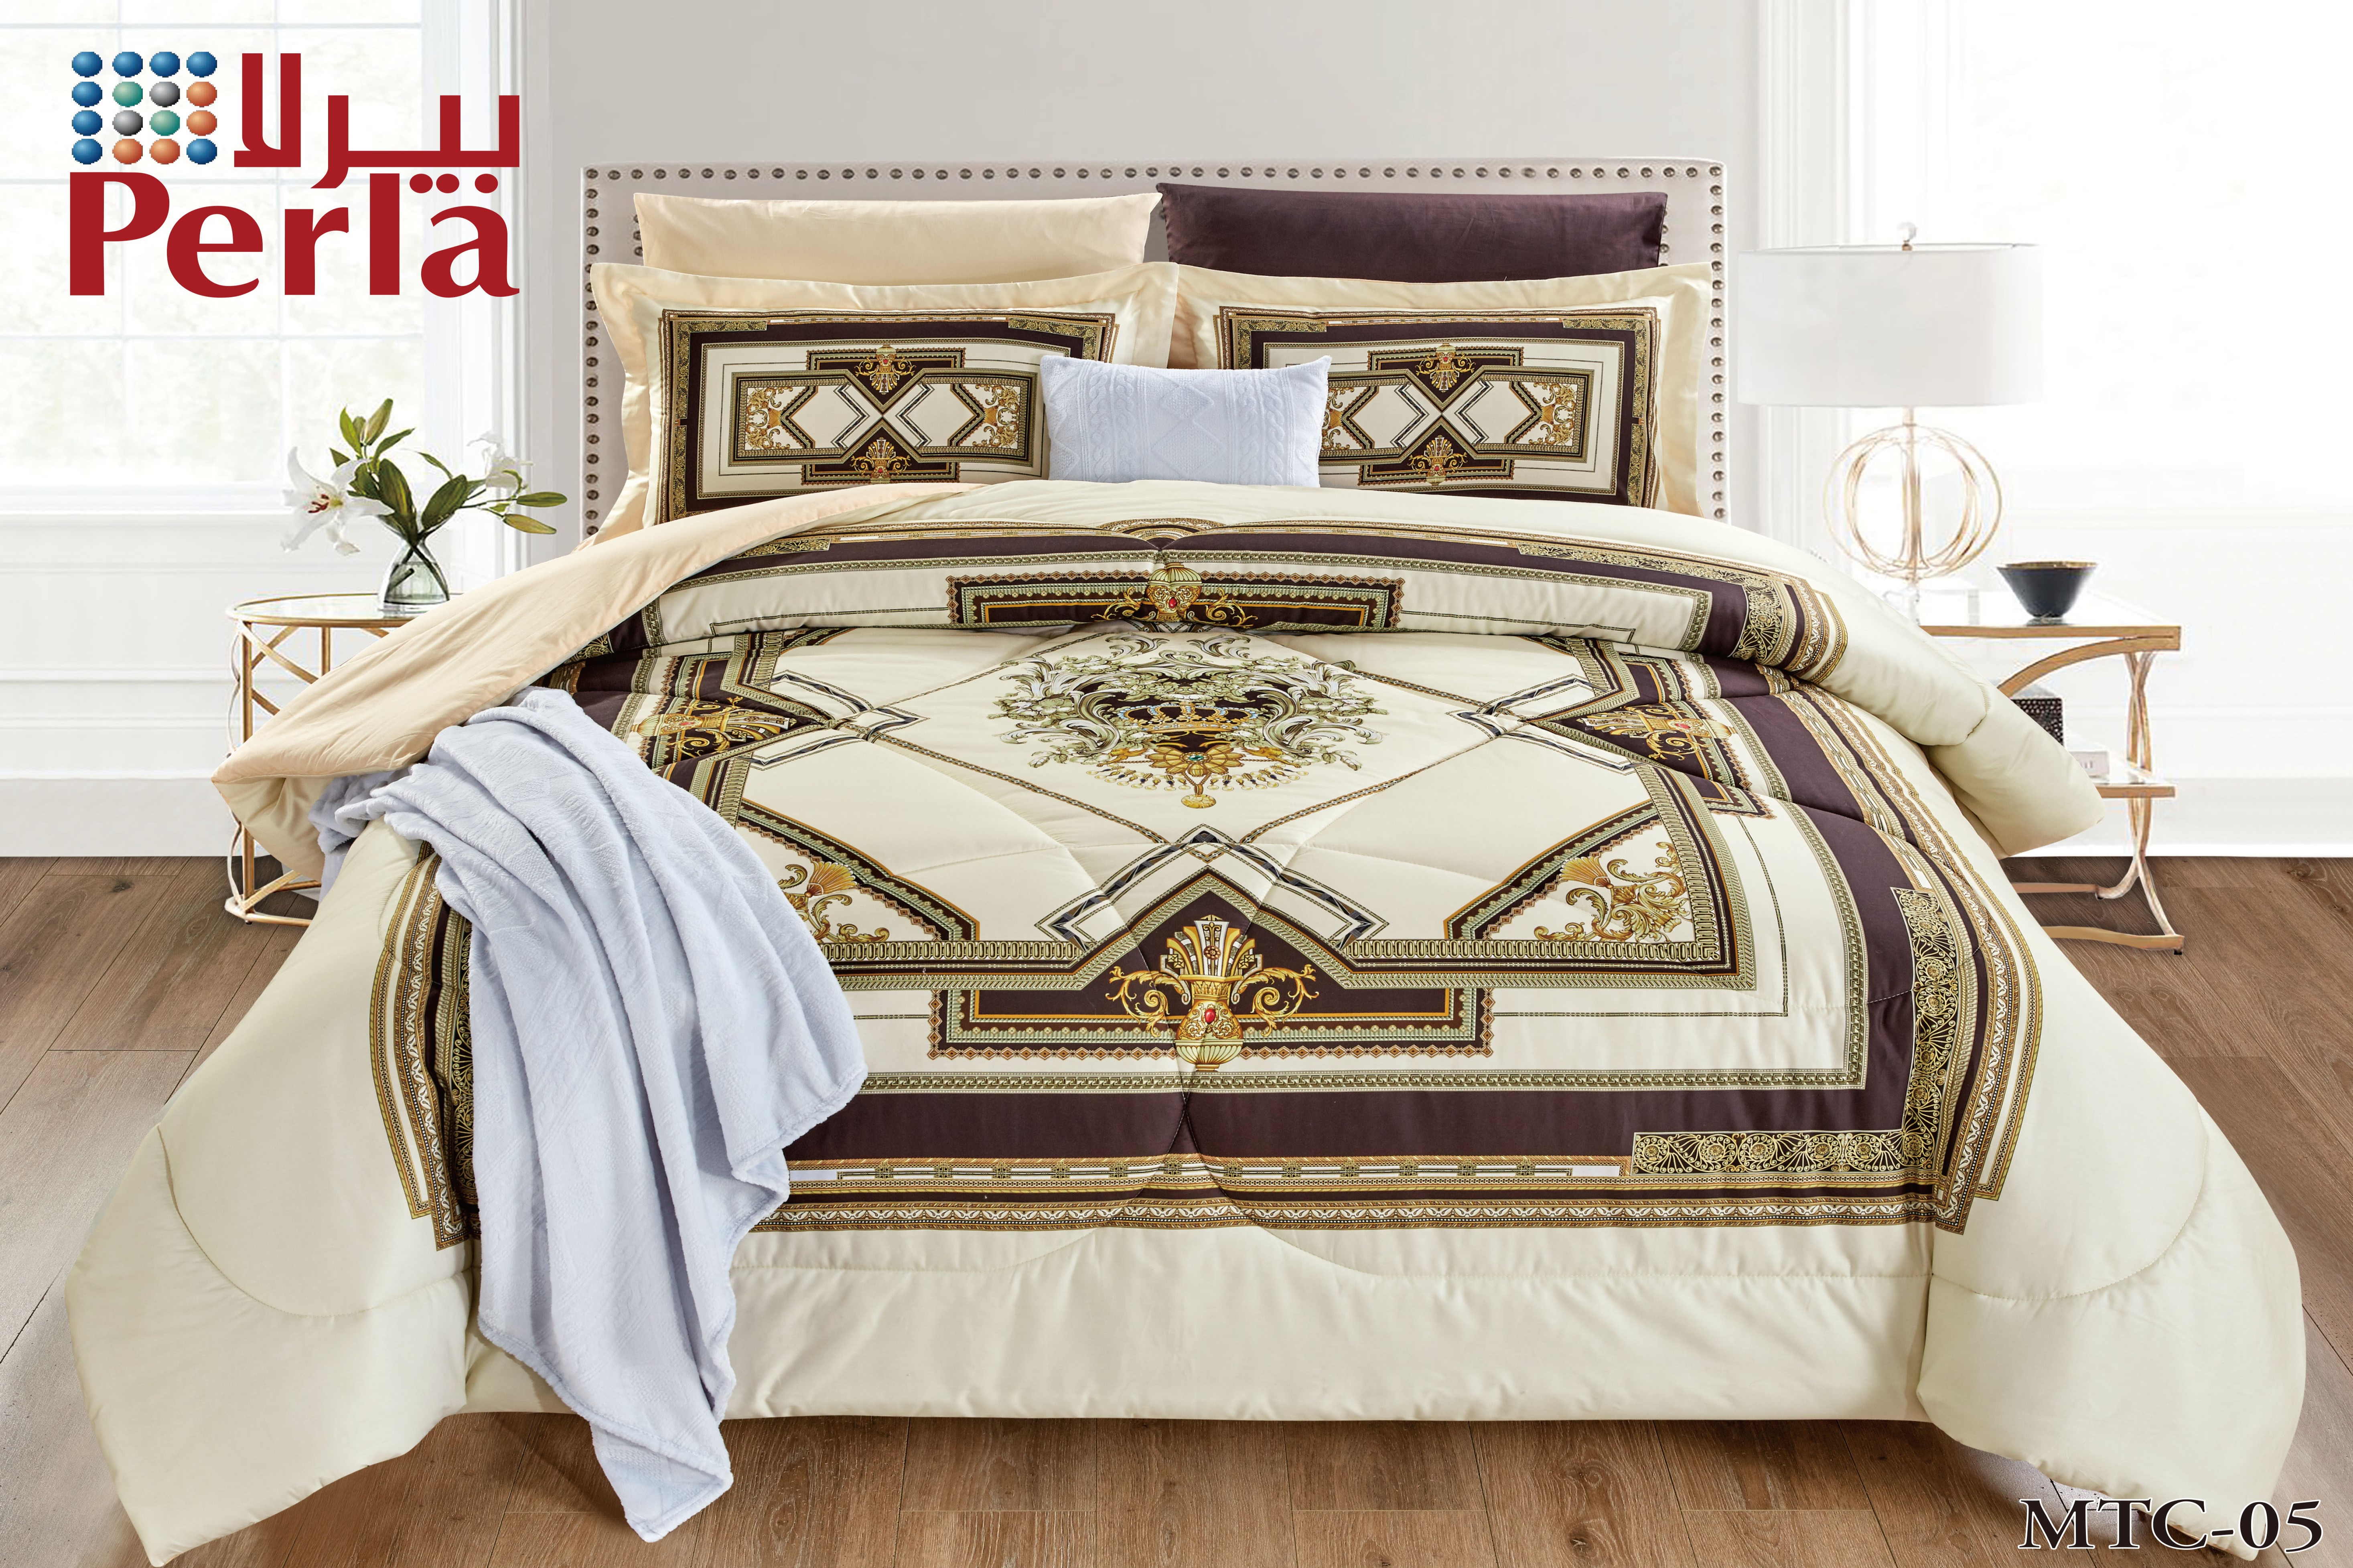 Perla Comforter Monte Carlo Collection 8 Pcs Set